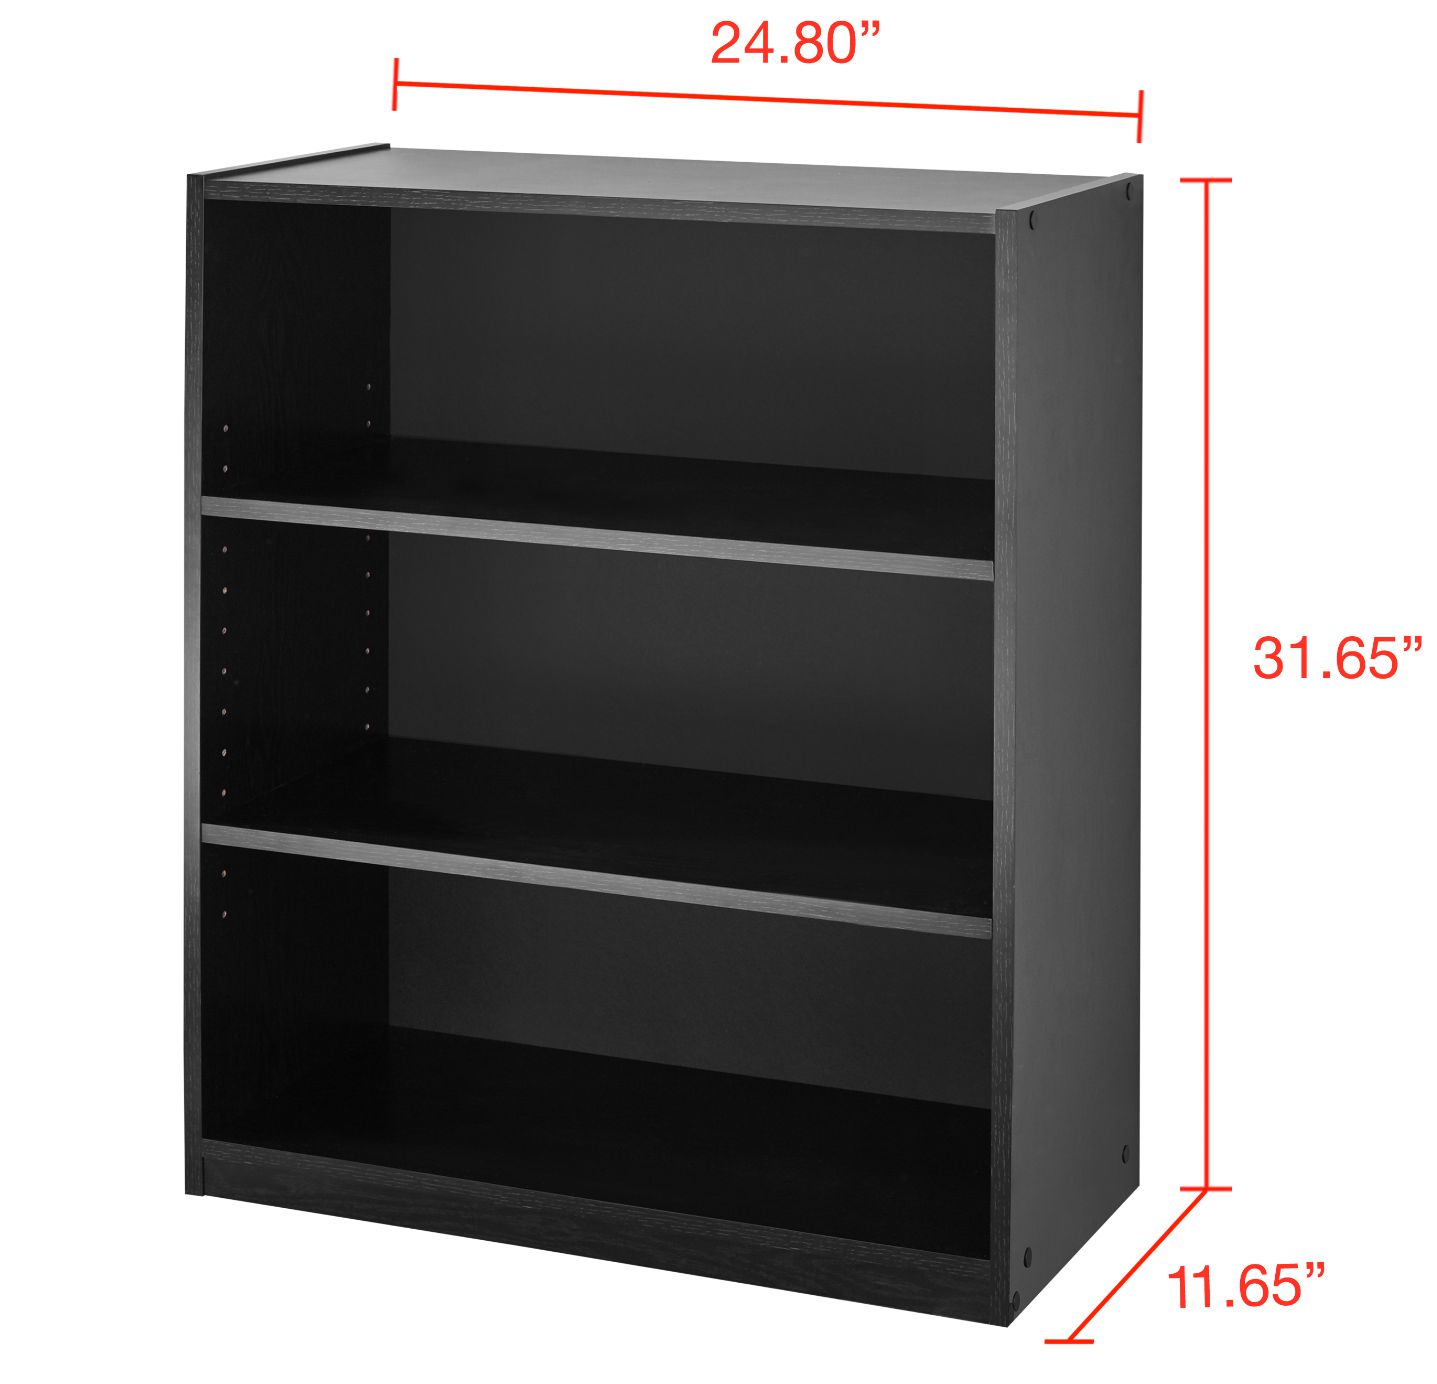 Mainstays 3 Shelf Bookcase True Black, 11 Inch Deep Bookcase